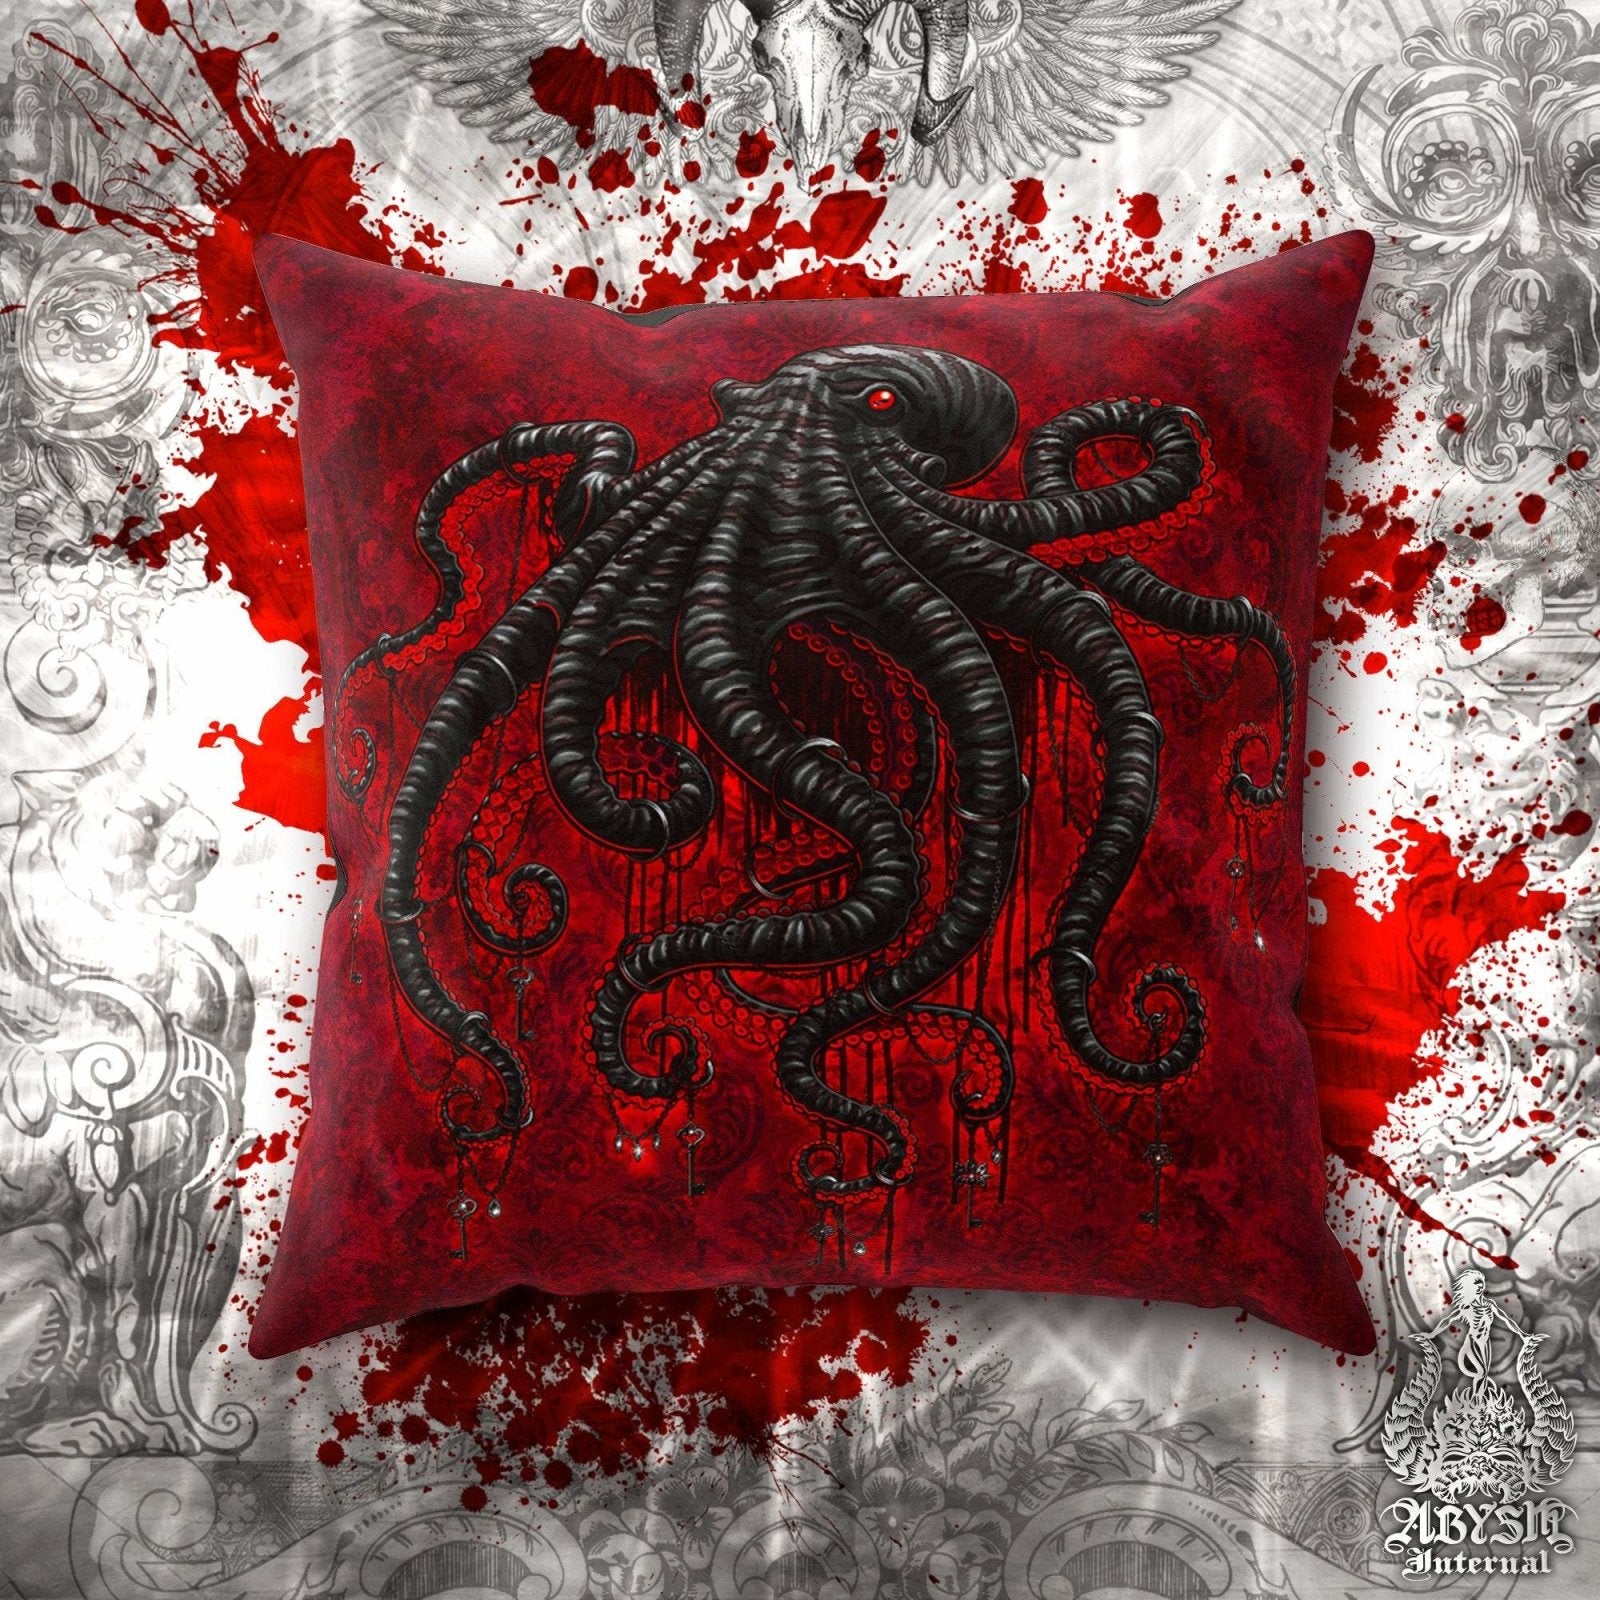 Gothic Throw Pillow, Decorative Accent Cushion, Goth Room Decor, Dark Art, Alternative Home - Bloody Black Octopus - Abysm Internal